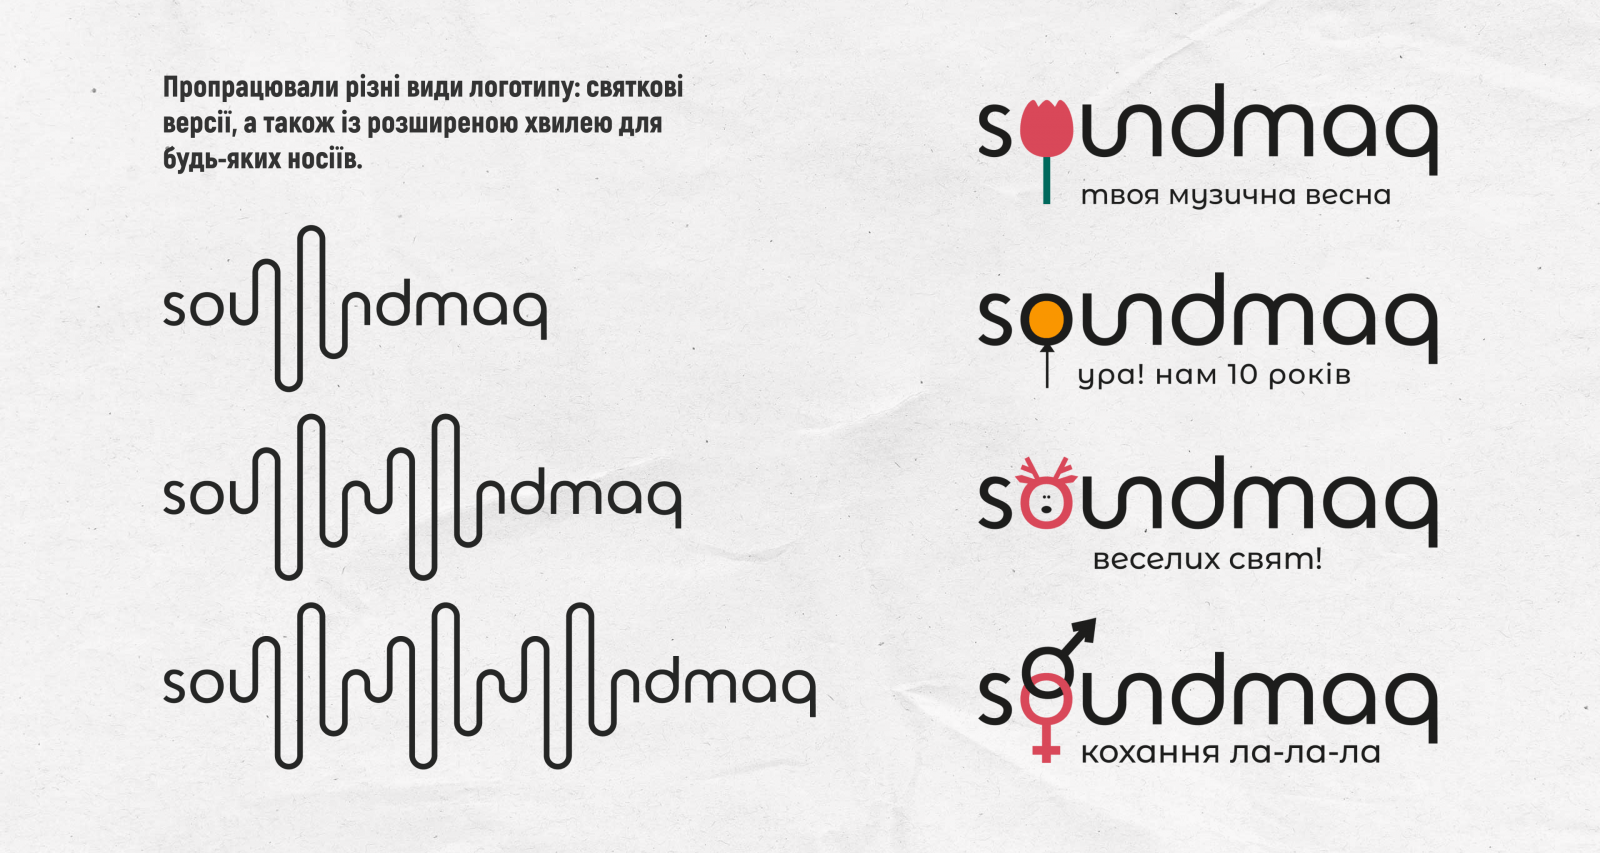 Брендинг для Soundmag